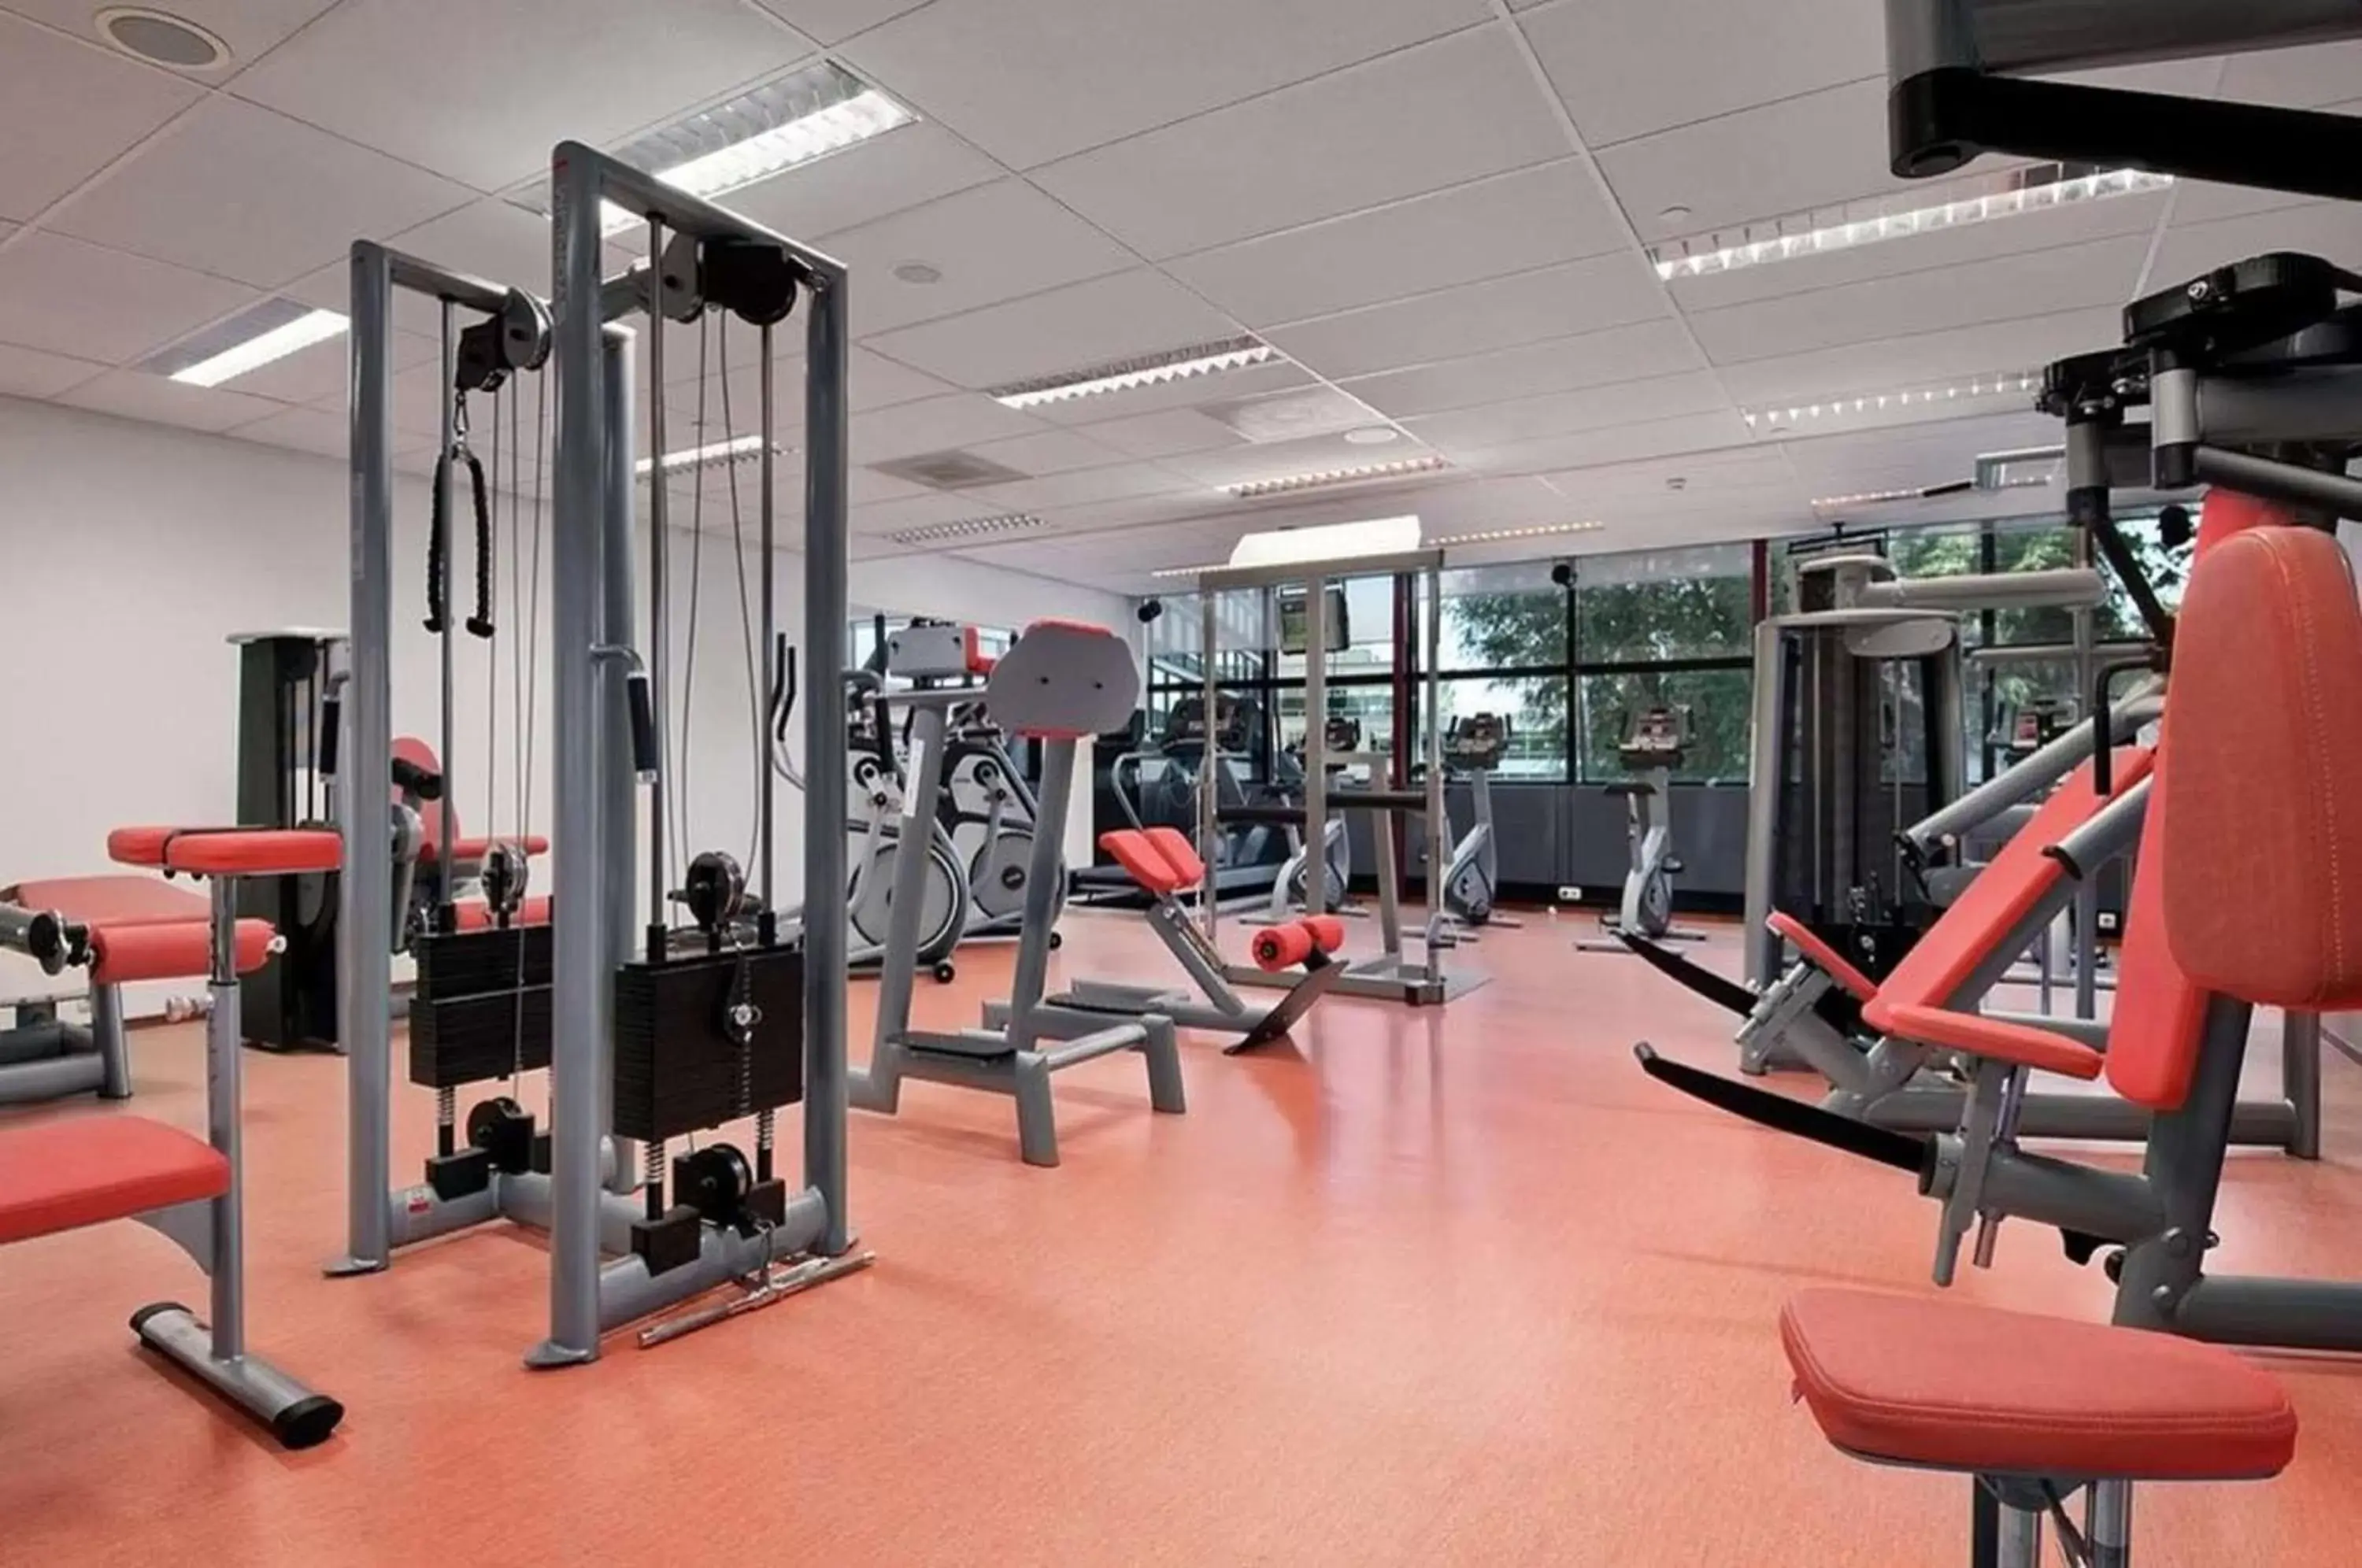 Fitness centre/facilities, Fitness Center/Facilities in Hilton Amsterdam